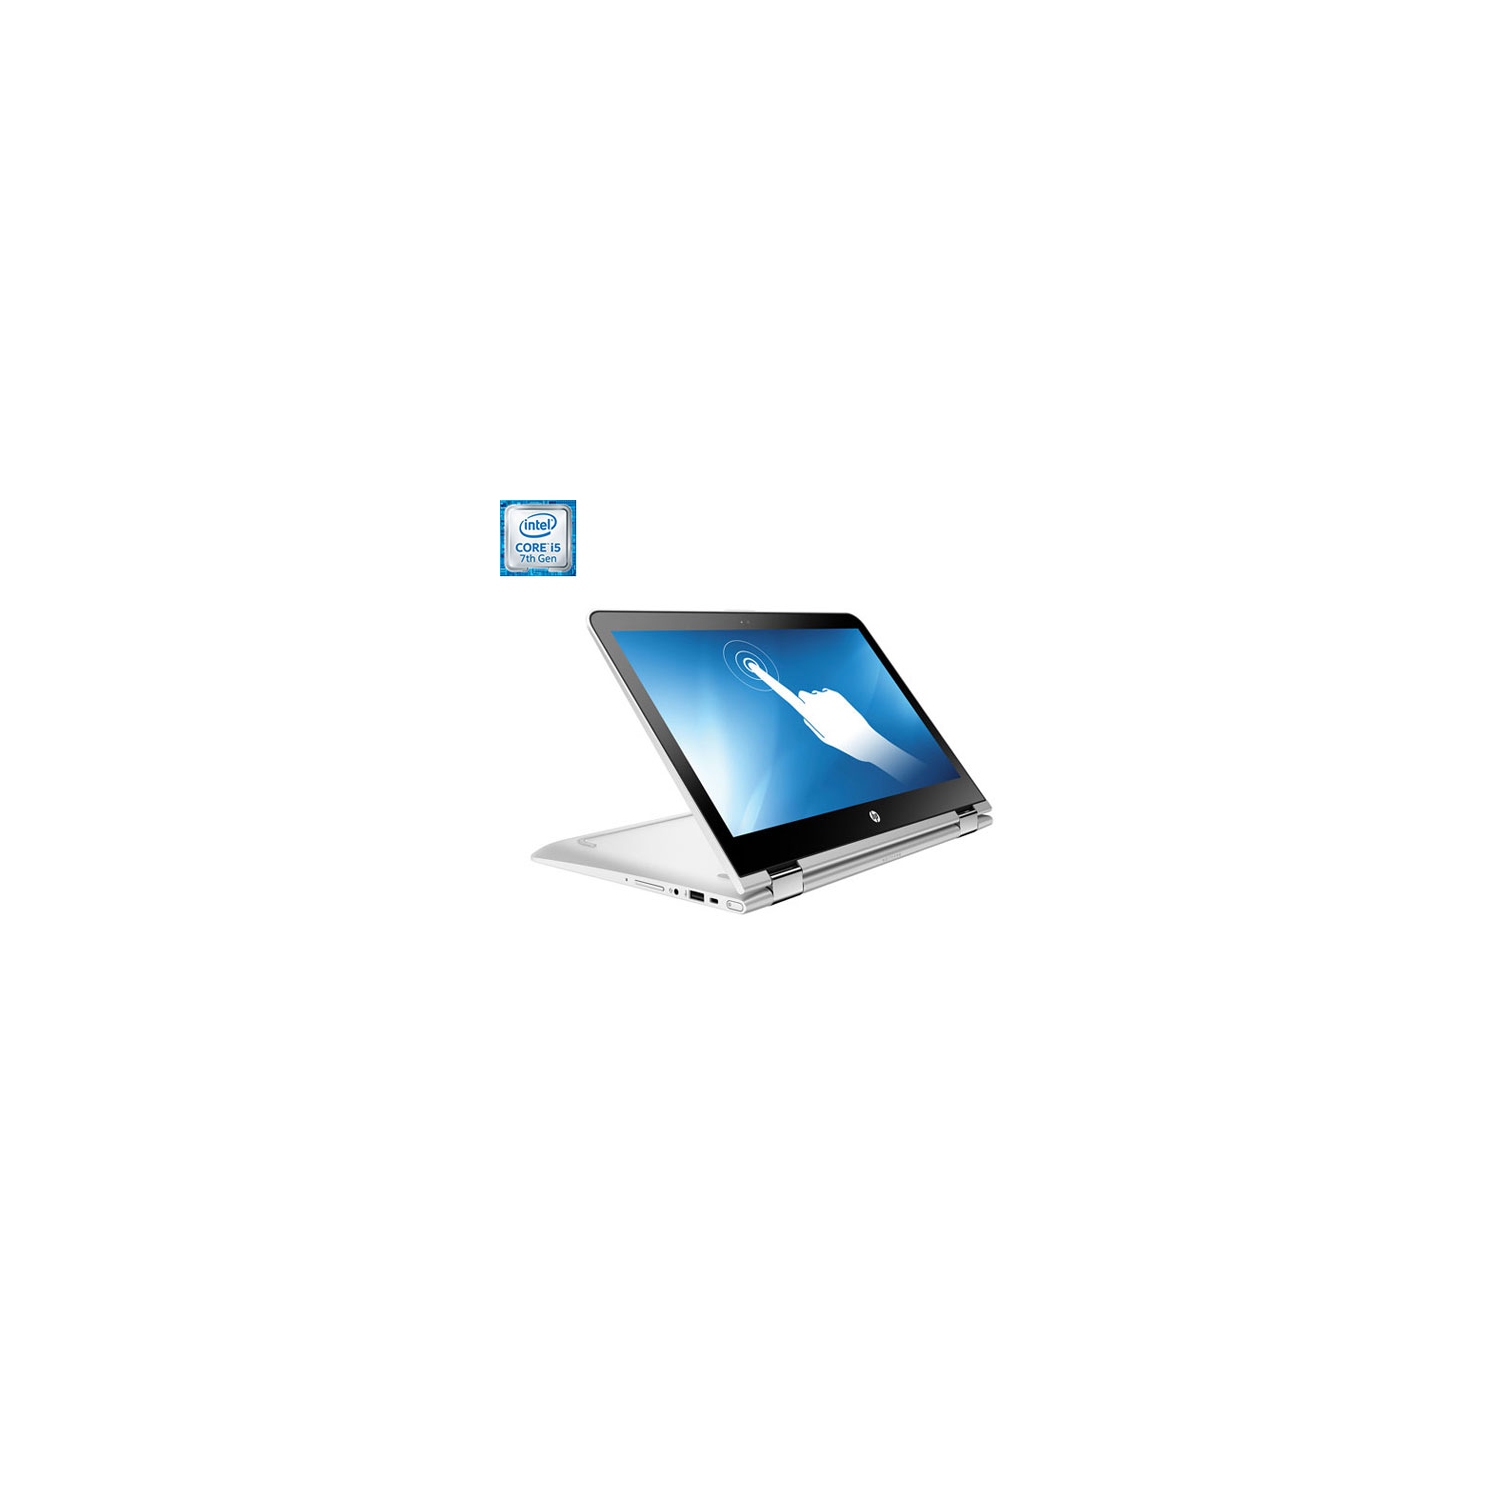 Refurbished (Good) -HP Pavilion x36013.3" Touchscreen Convertible Laptop-Silver (Intel Ci5-7200U/128GB SSD/8GB RAM/Win 10)